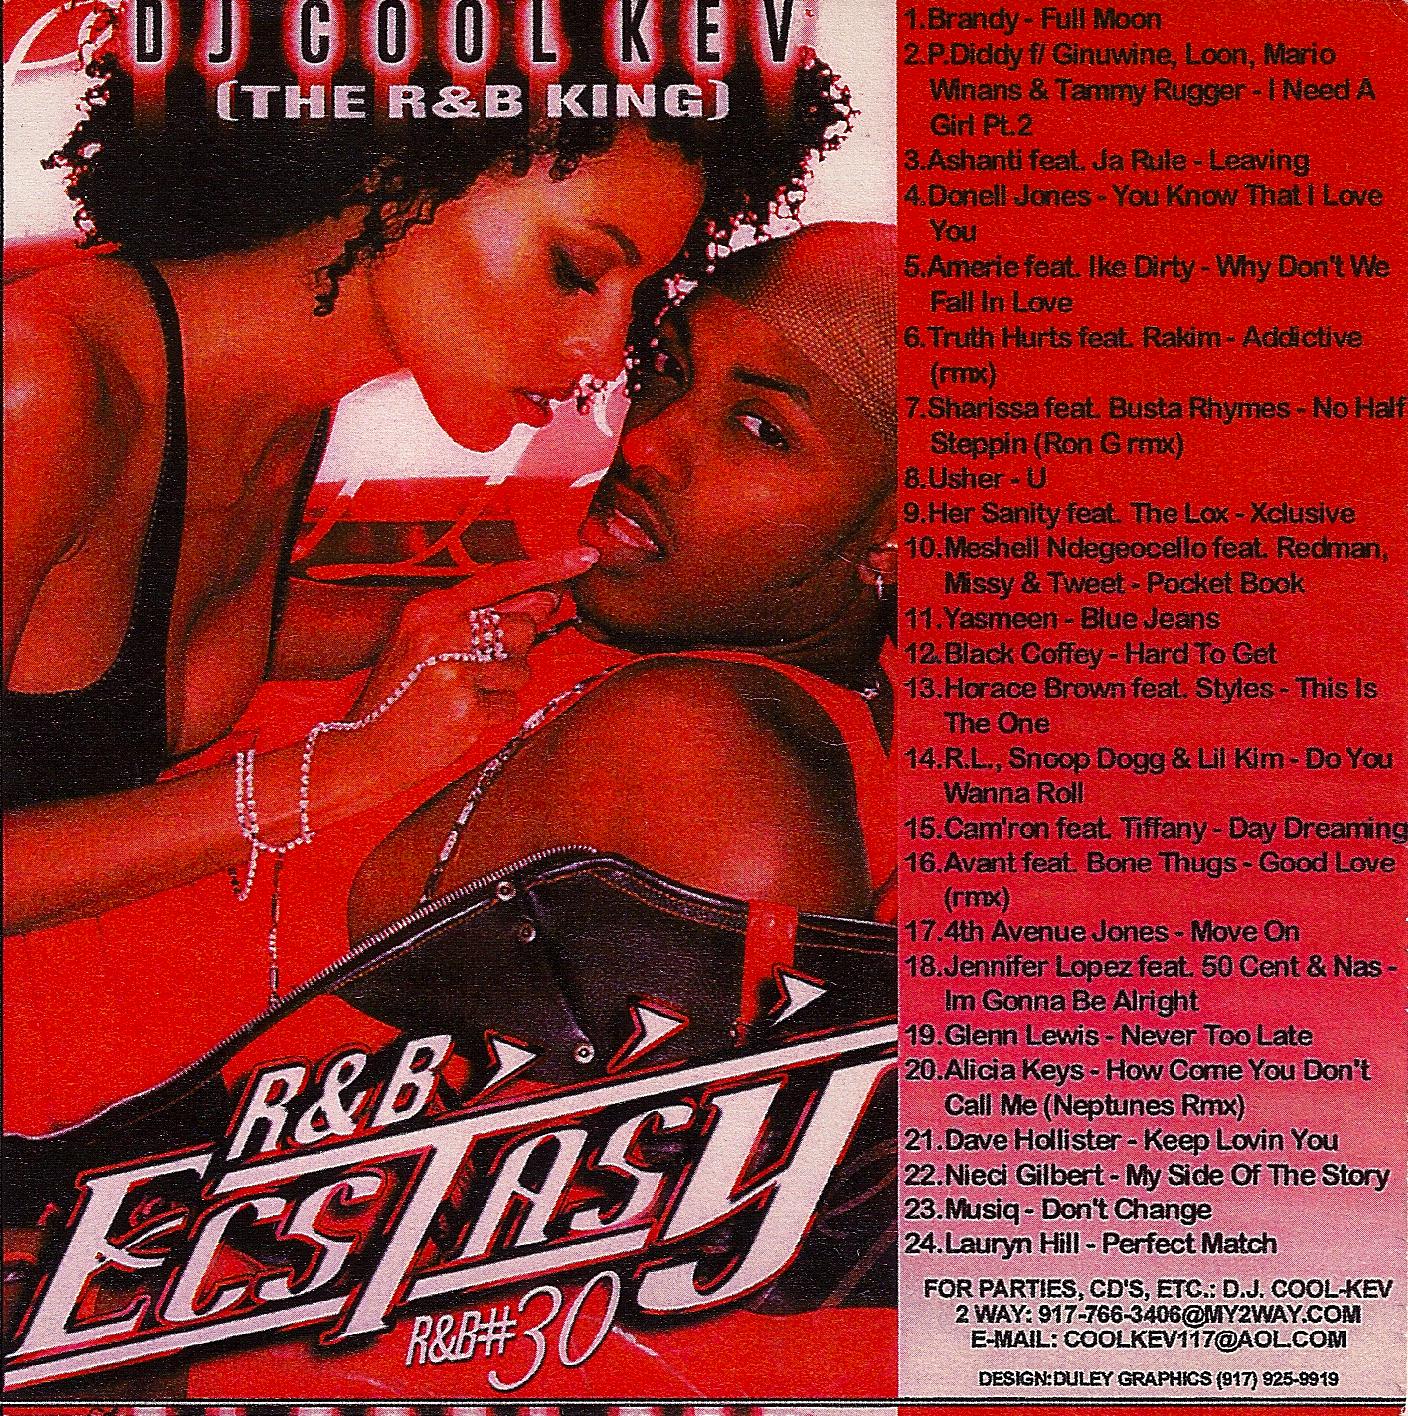 DJ Cool Kev – R&B 30, R&B, RNB, Throwback R&B, Mixtape Downloads, Downloads